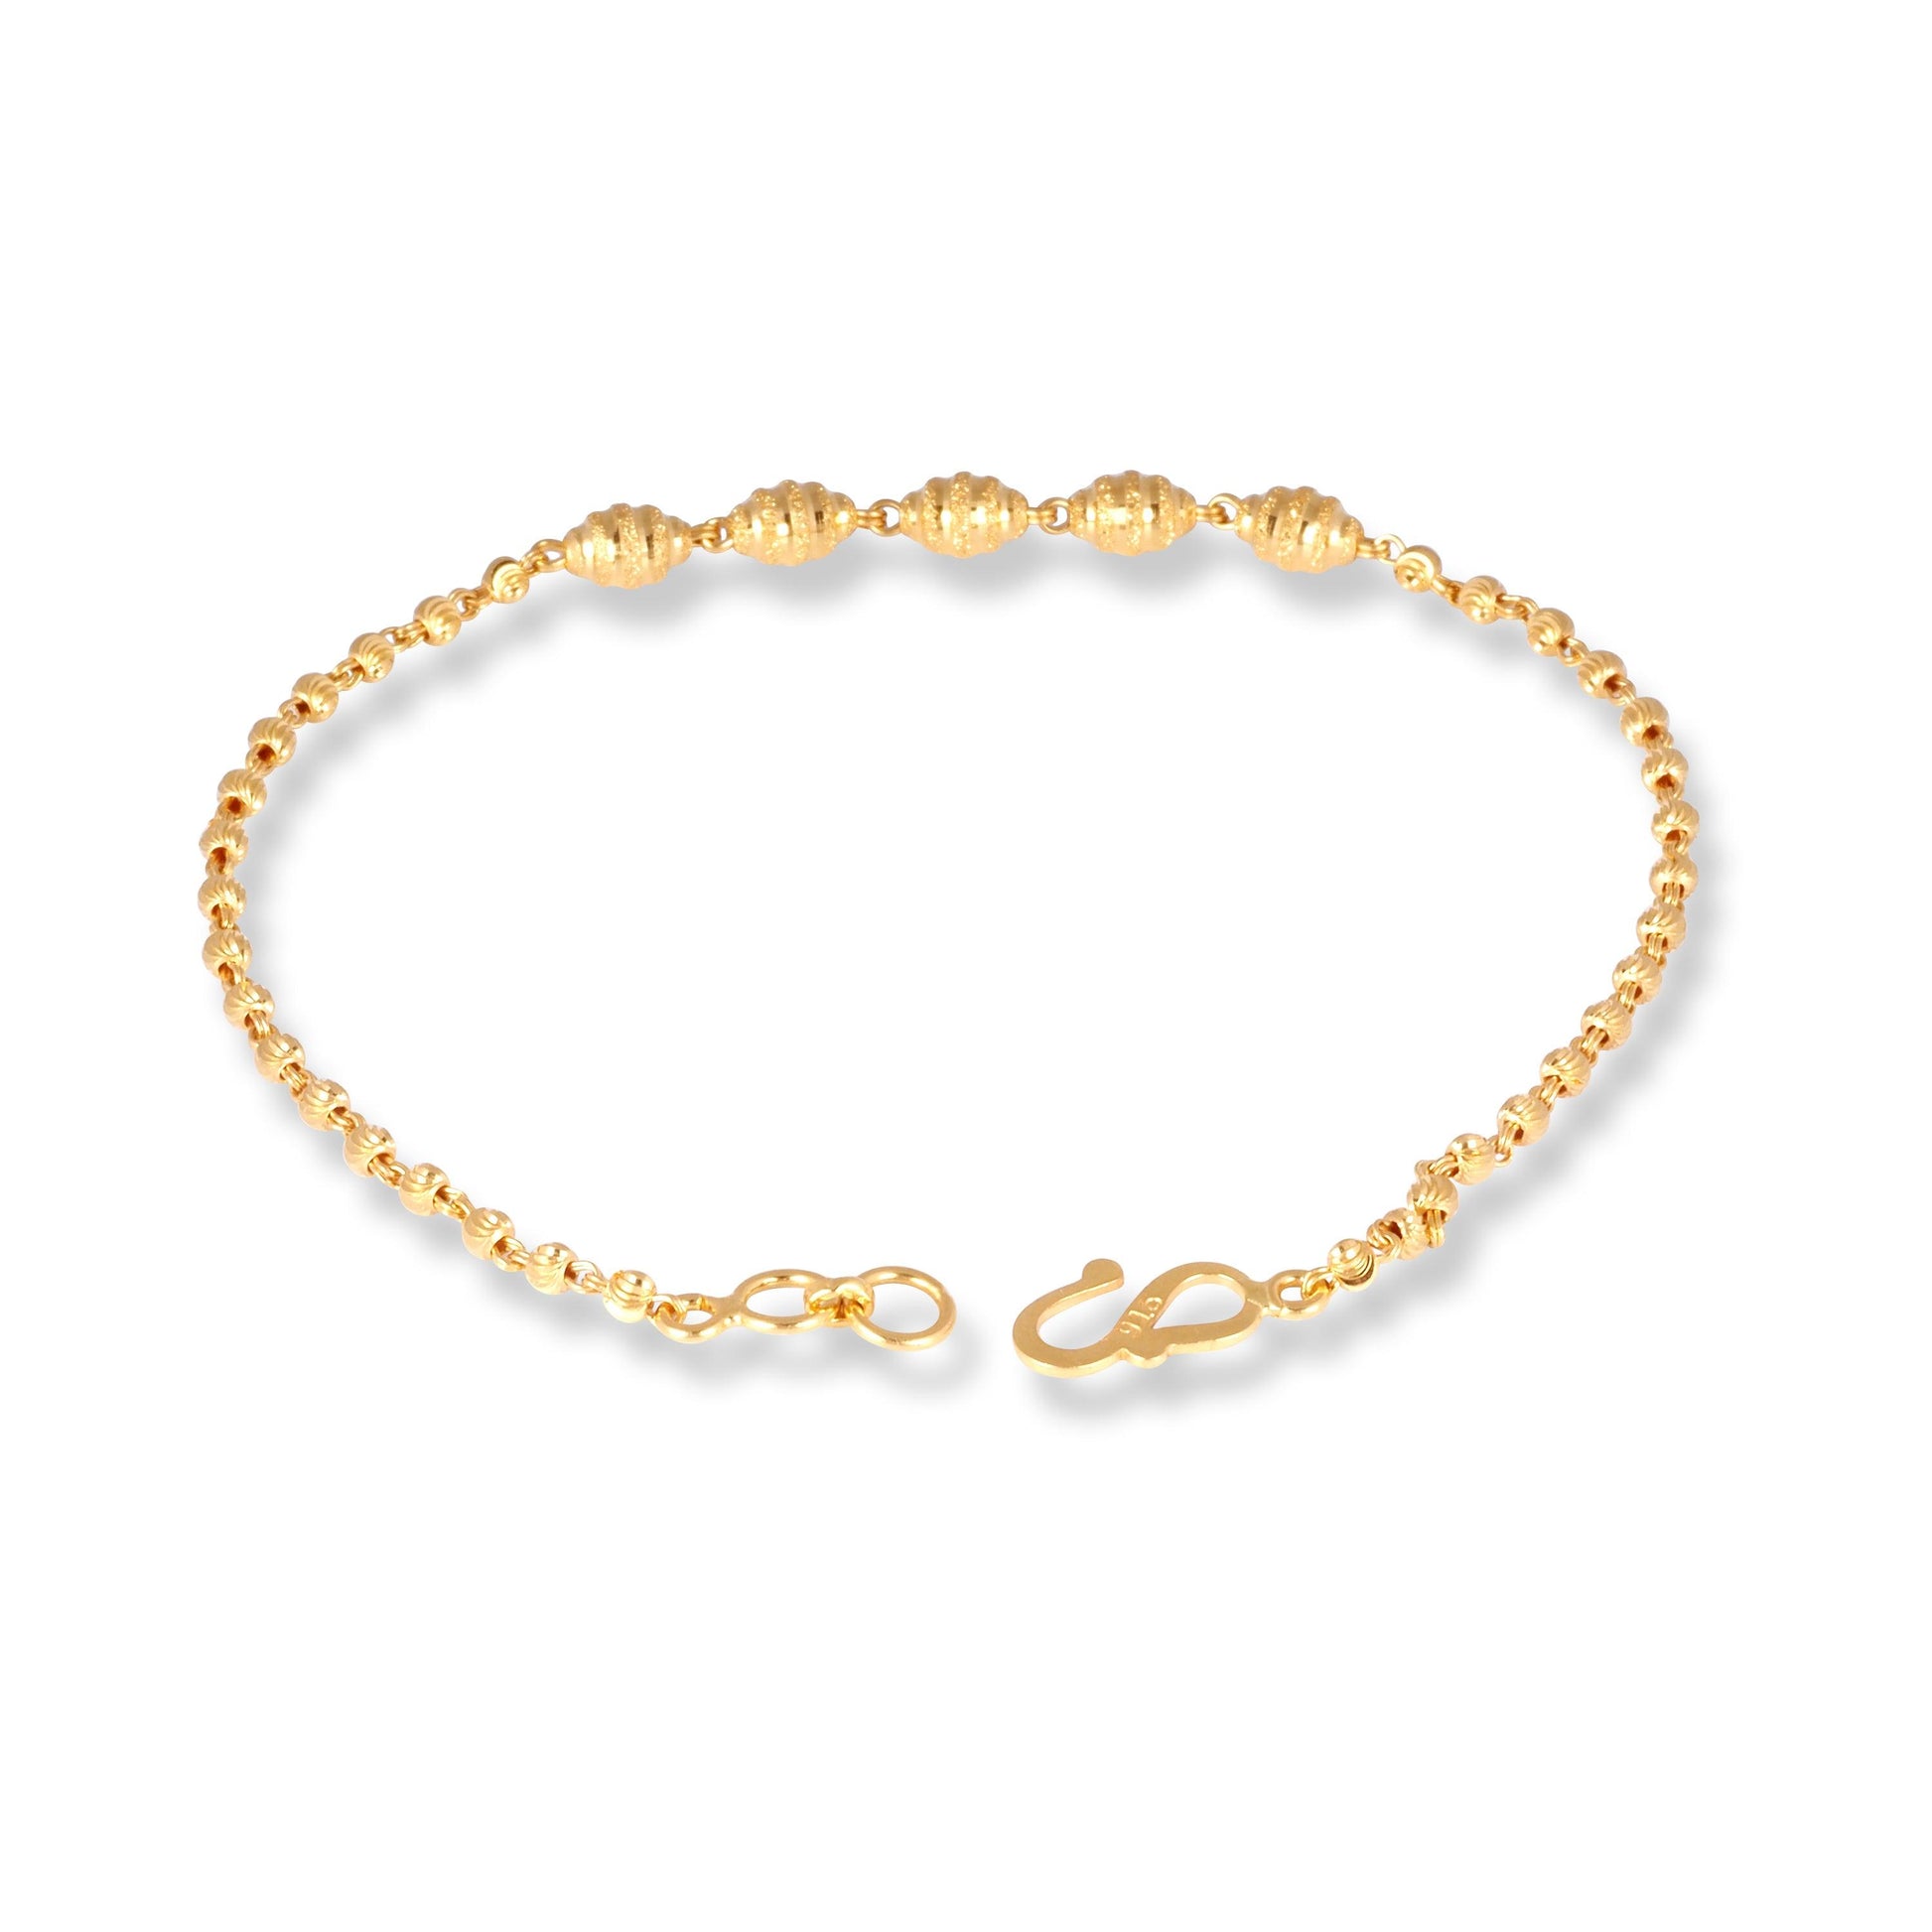 22ct Gold Ladies Five Diamond Cut Beads Bracelet with S Clasp LBR-7160 - Minar Jewellers